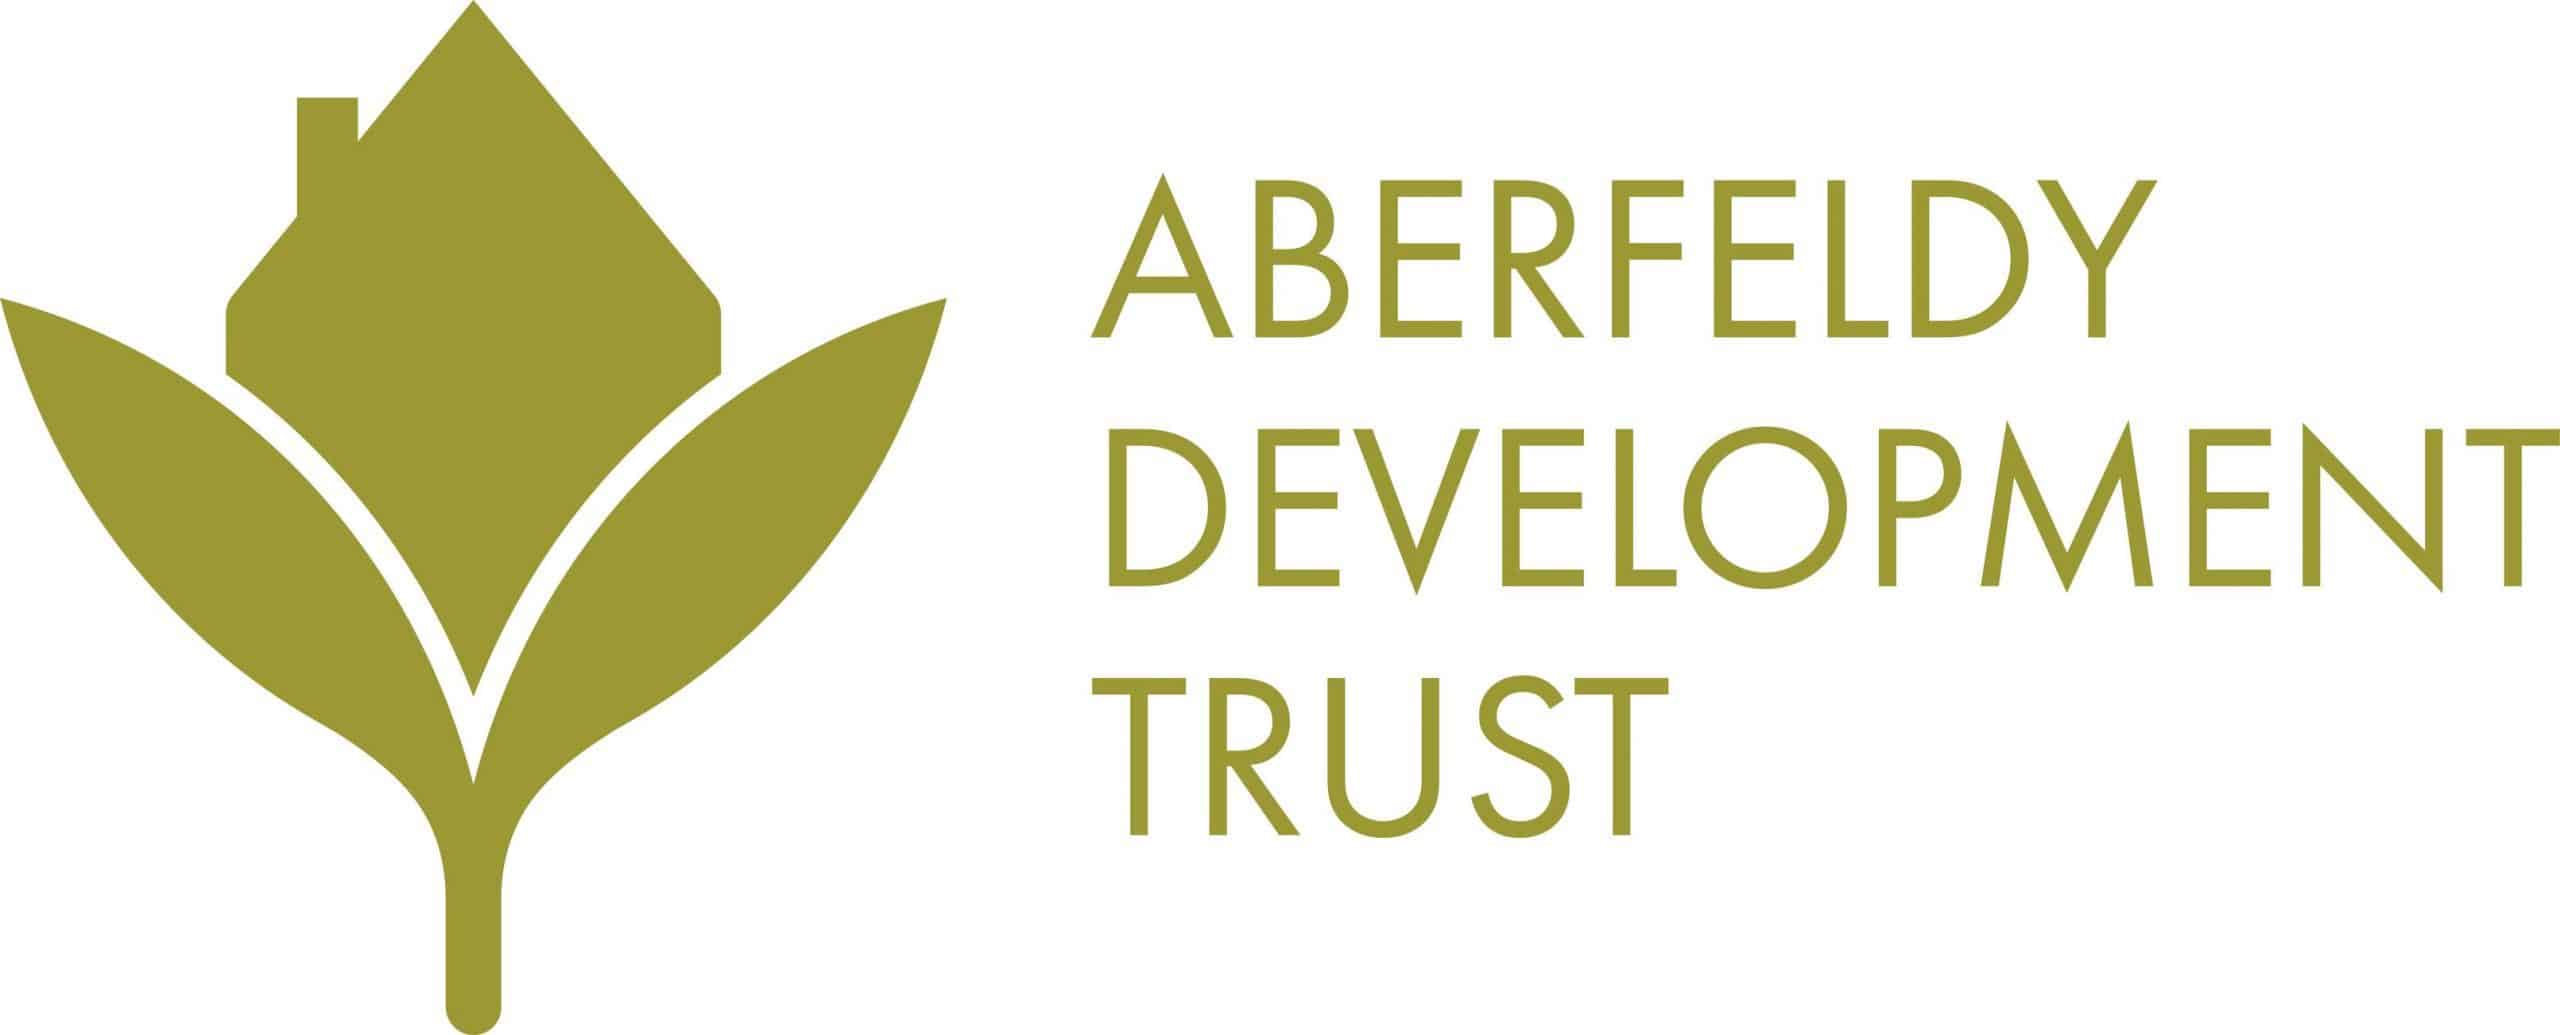 New development trust set up to address Aberfeldy's lack of affordable homes